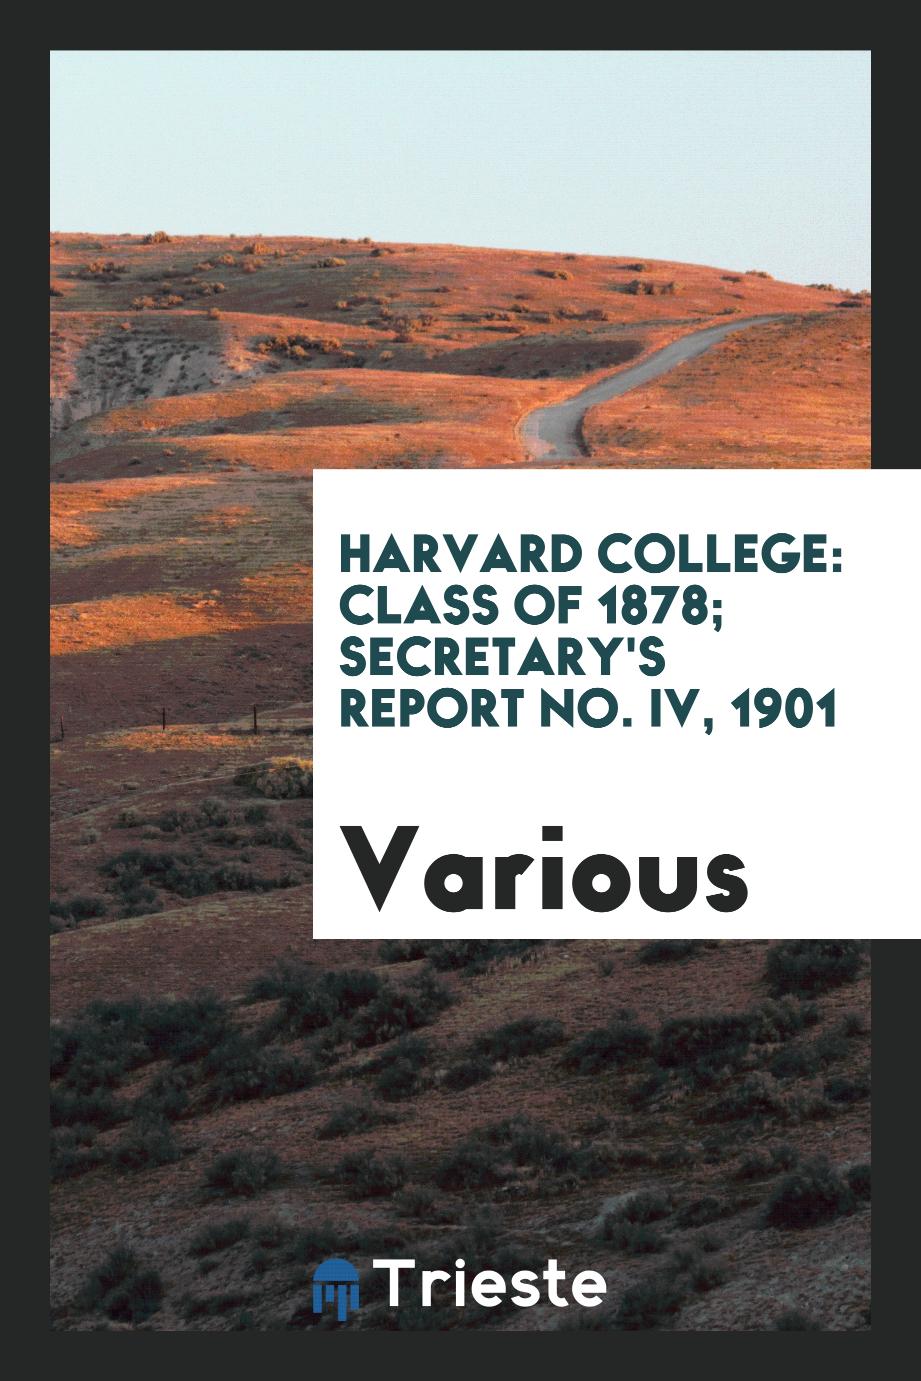 Harvard College: Class of 1878; Secretary's report No. IV, 1901